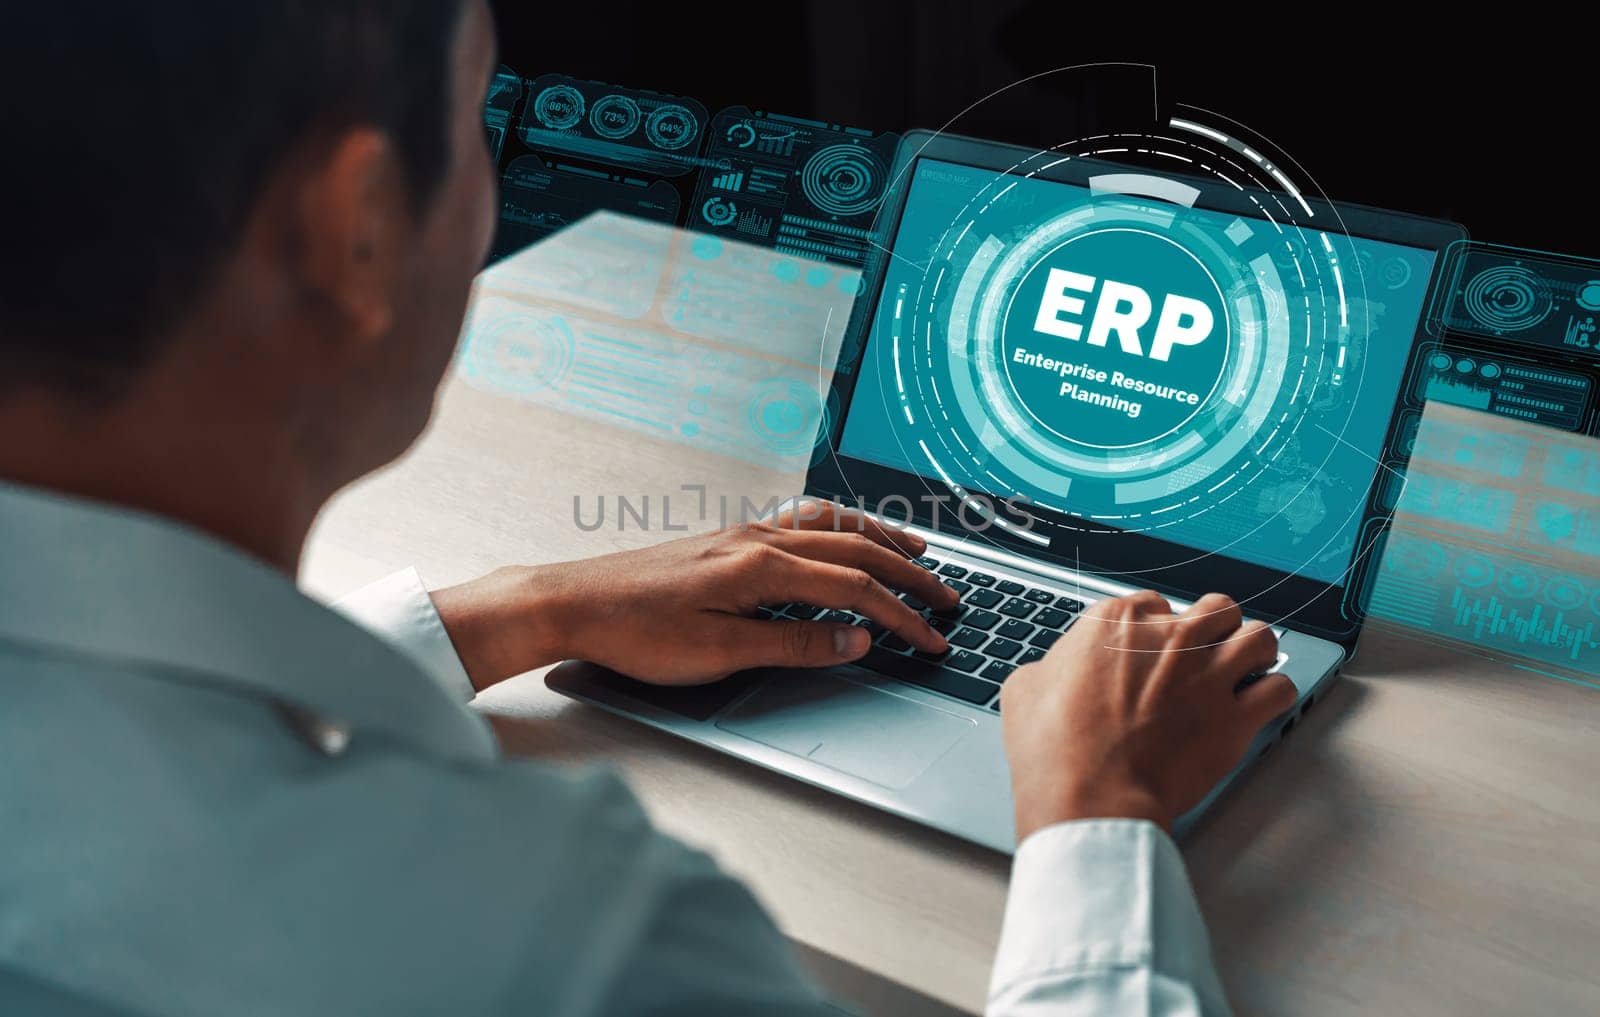 Enterprise Resource Management ERP software system for business resources uds by biancoblue